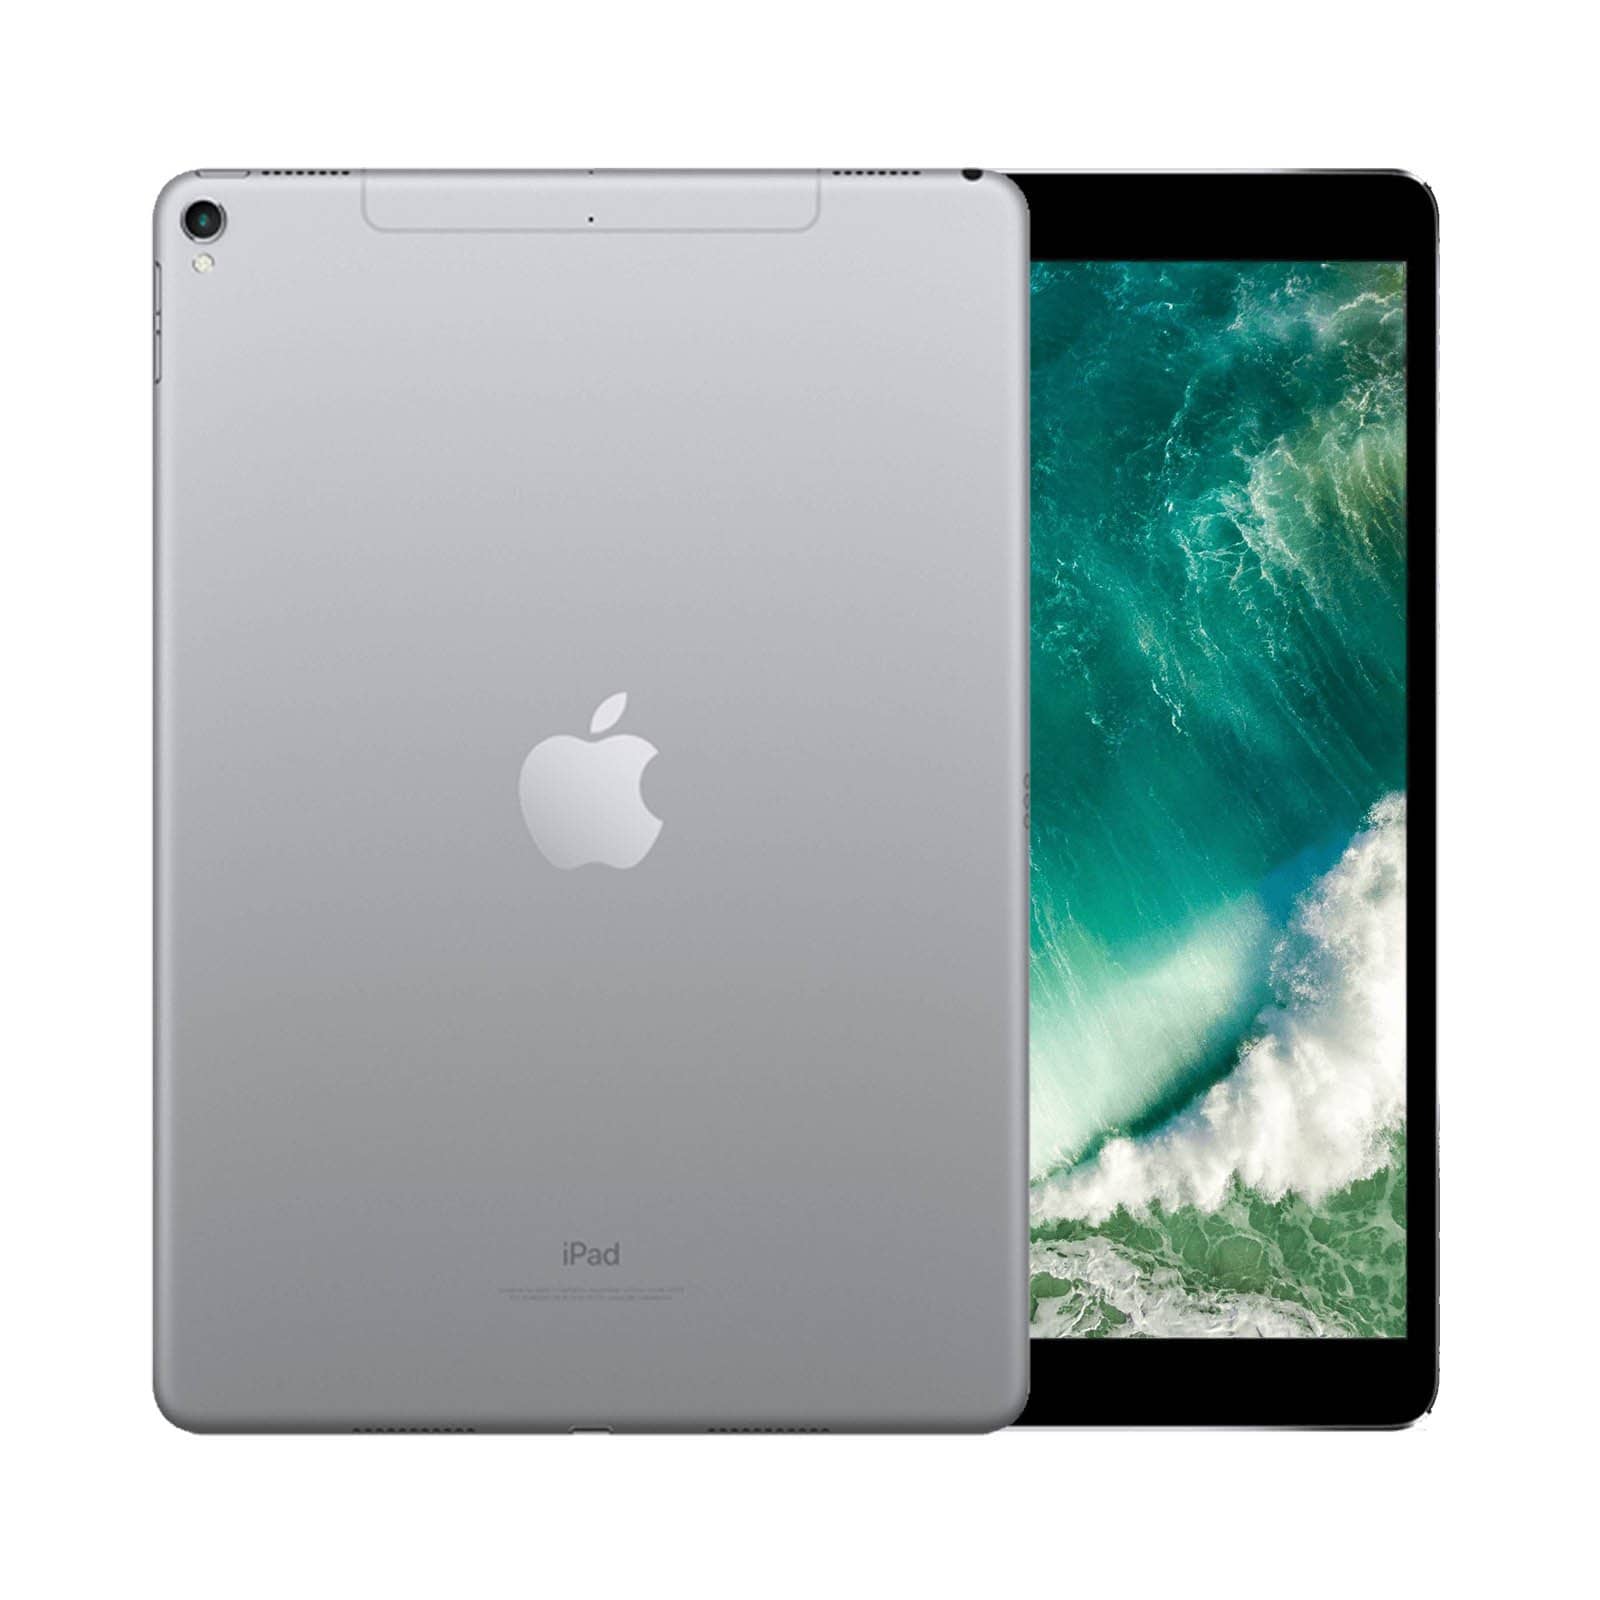 iPad Pro 10.5 Inch 512GB Space Grey Very Good - Unlocked 512GB Space Grey Very Good